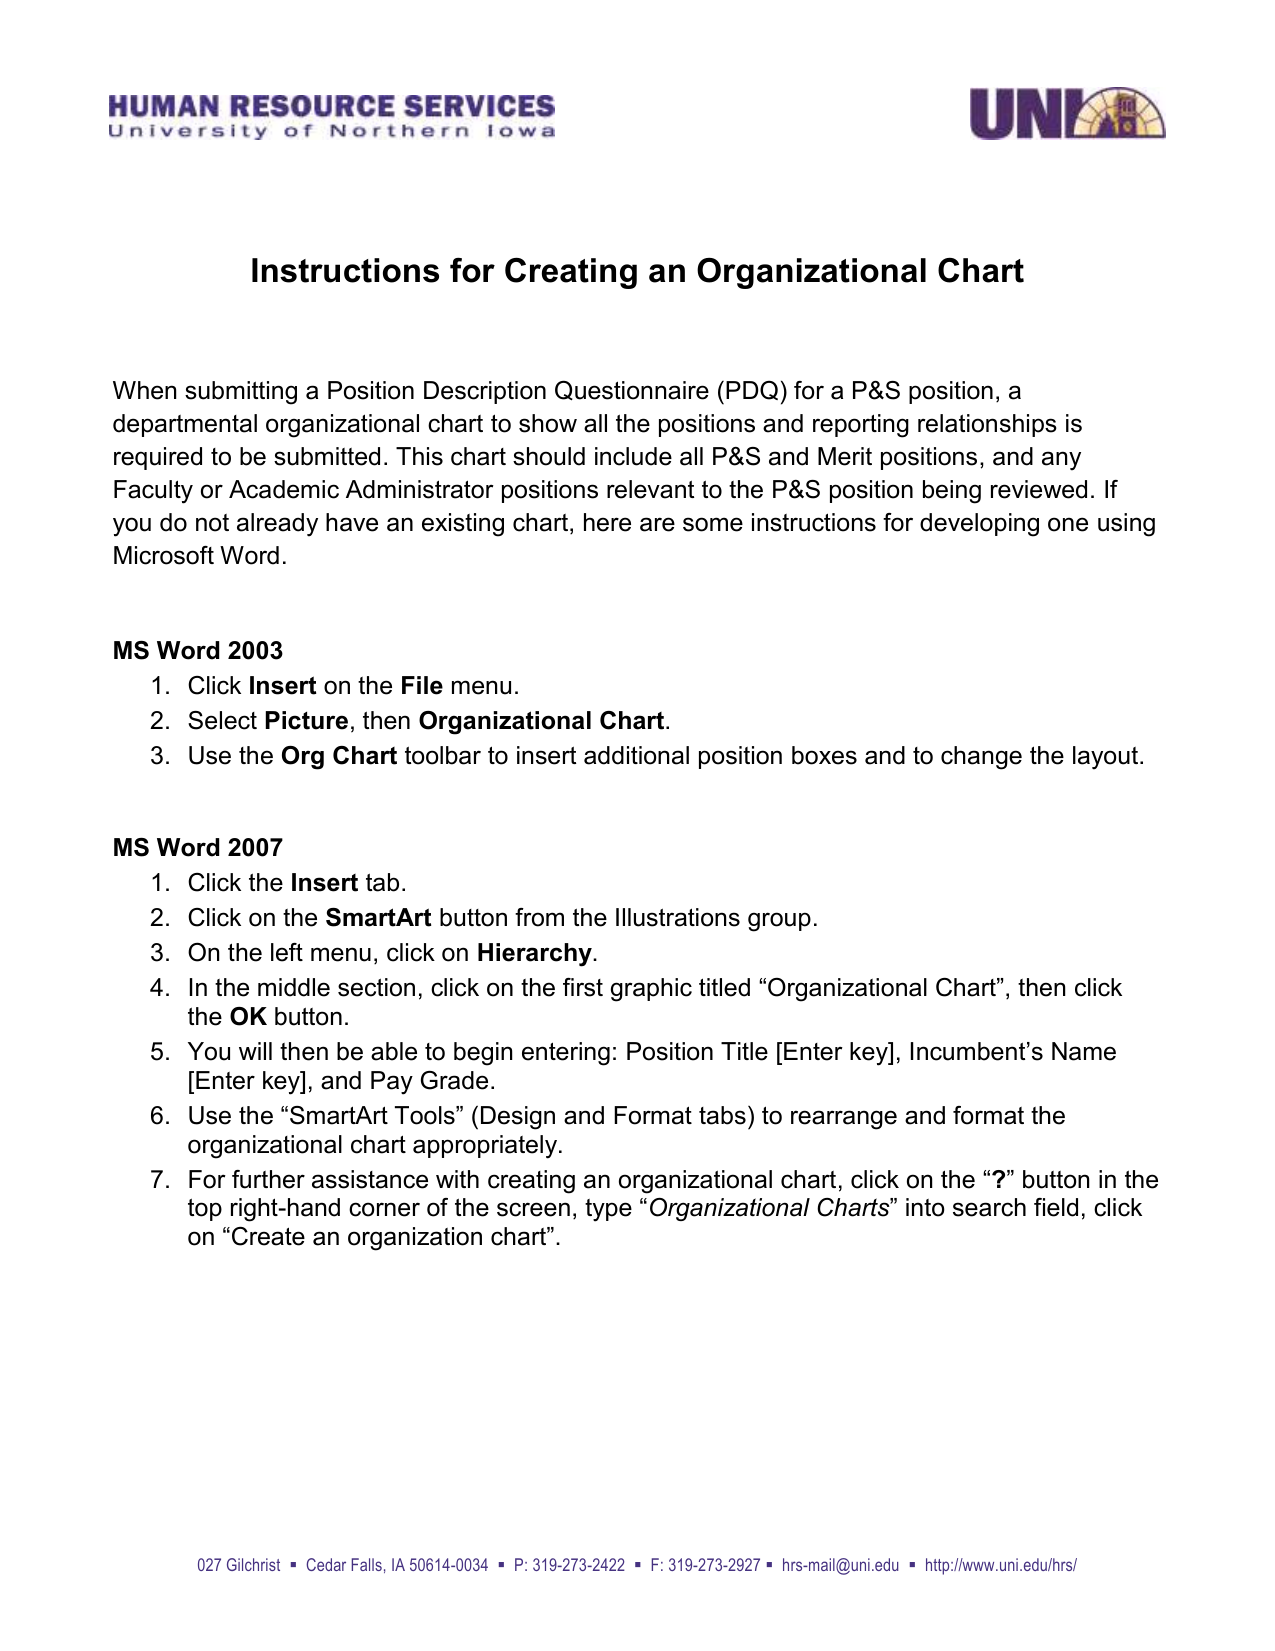 How To Make A Organizational Chart In Microsoft Word